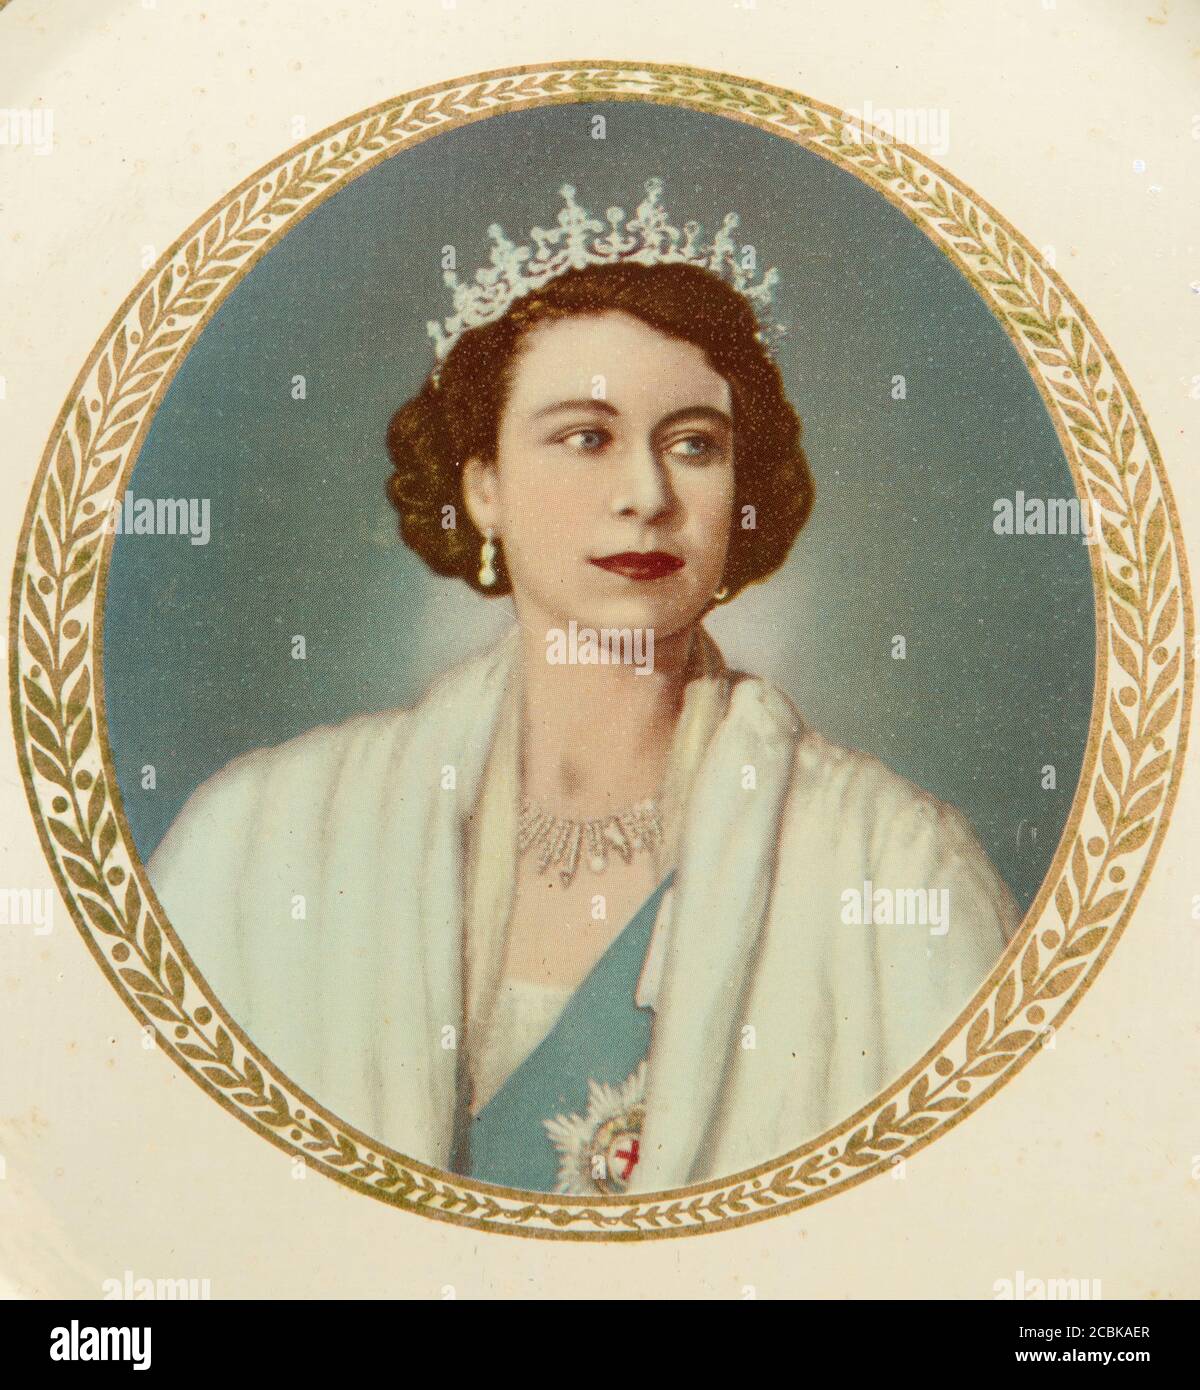 Queen Elizabeth II Coronation 2 June 1953 portrait on a souvenir vintage Portland Ware tin plate. The young Queen Elizabeth HOMER SYKES Stock Photo